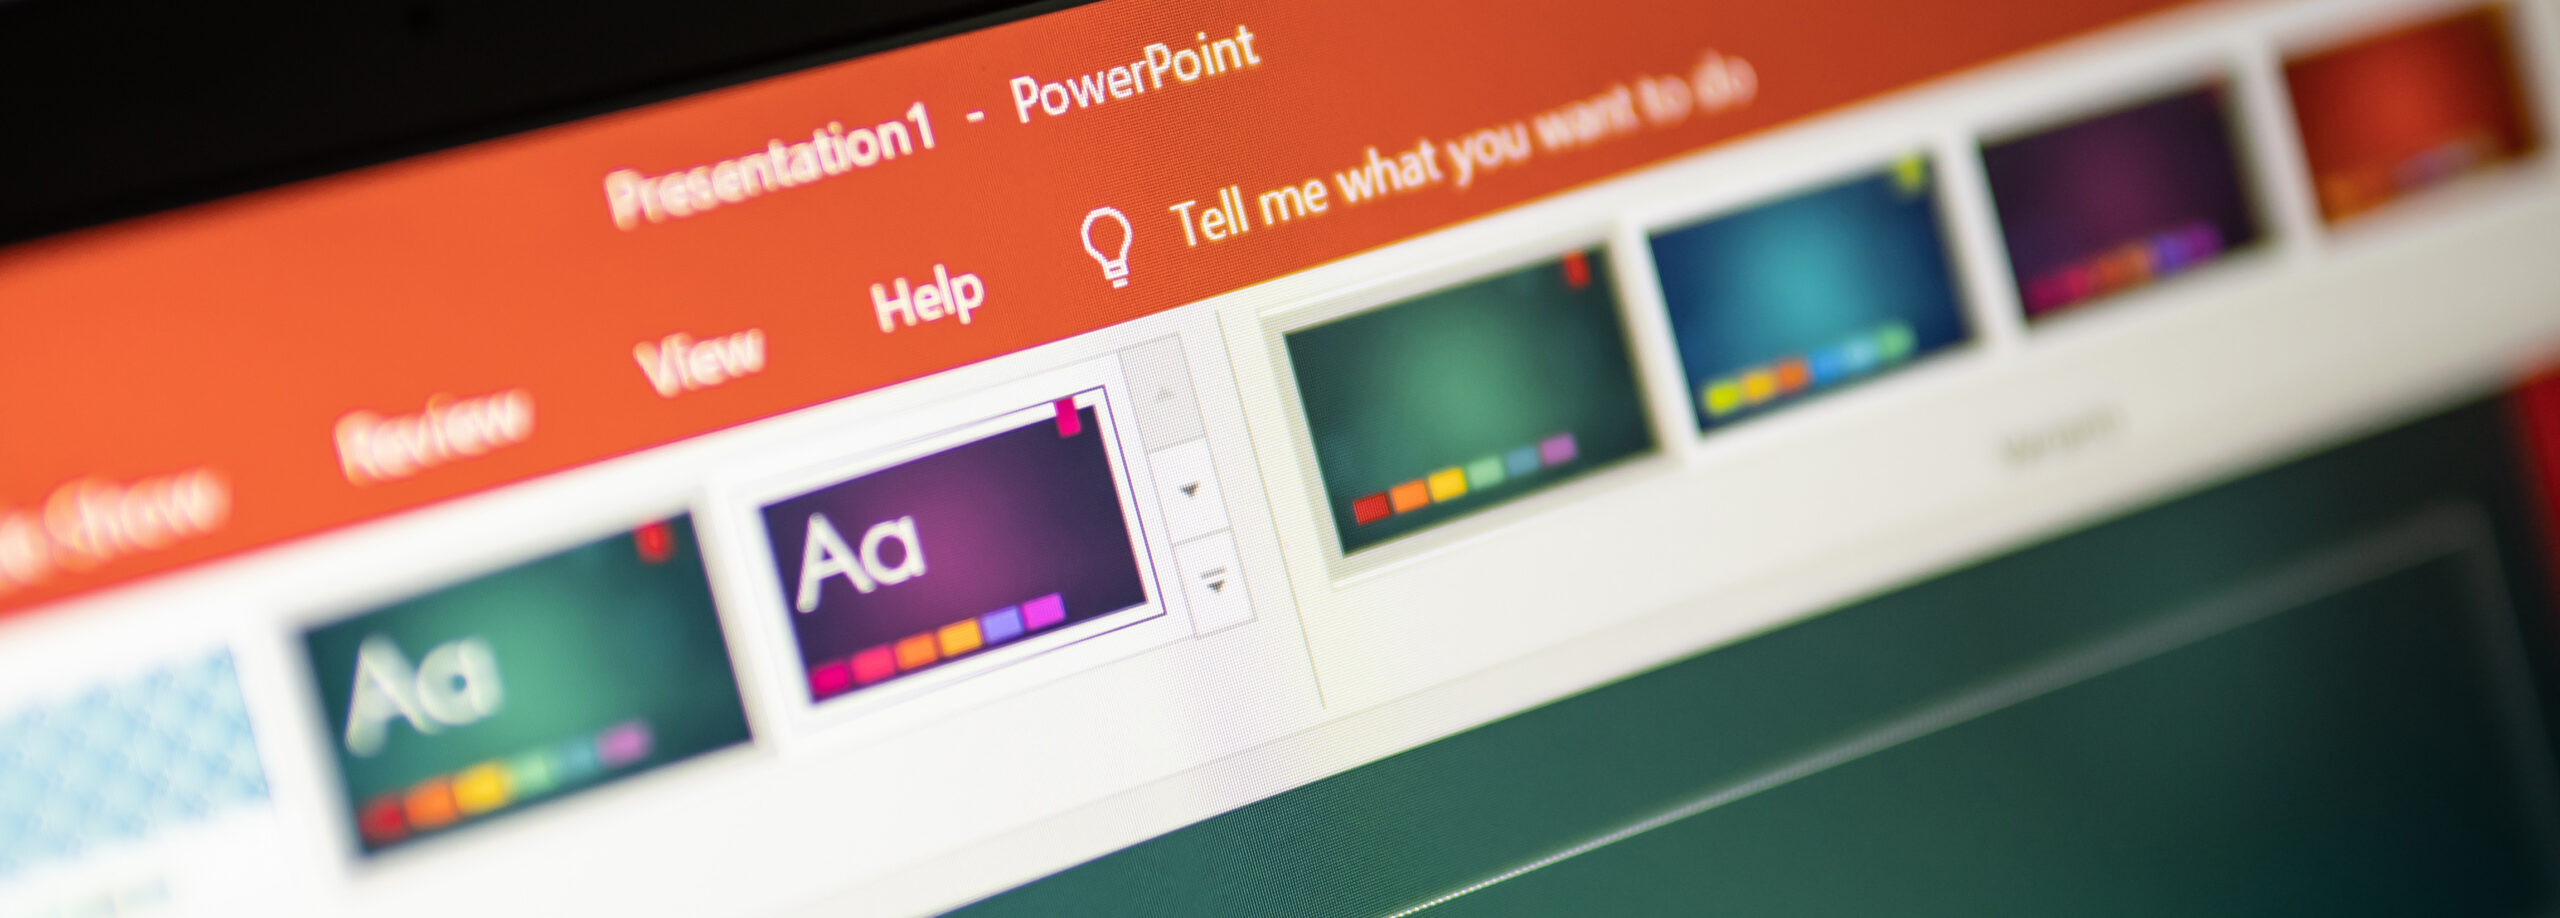 Microsoft PowerPoint presentation edit interface